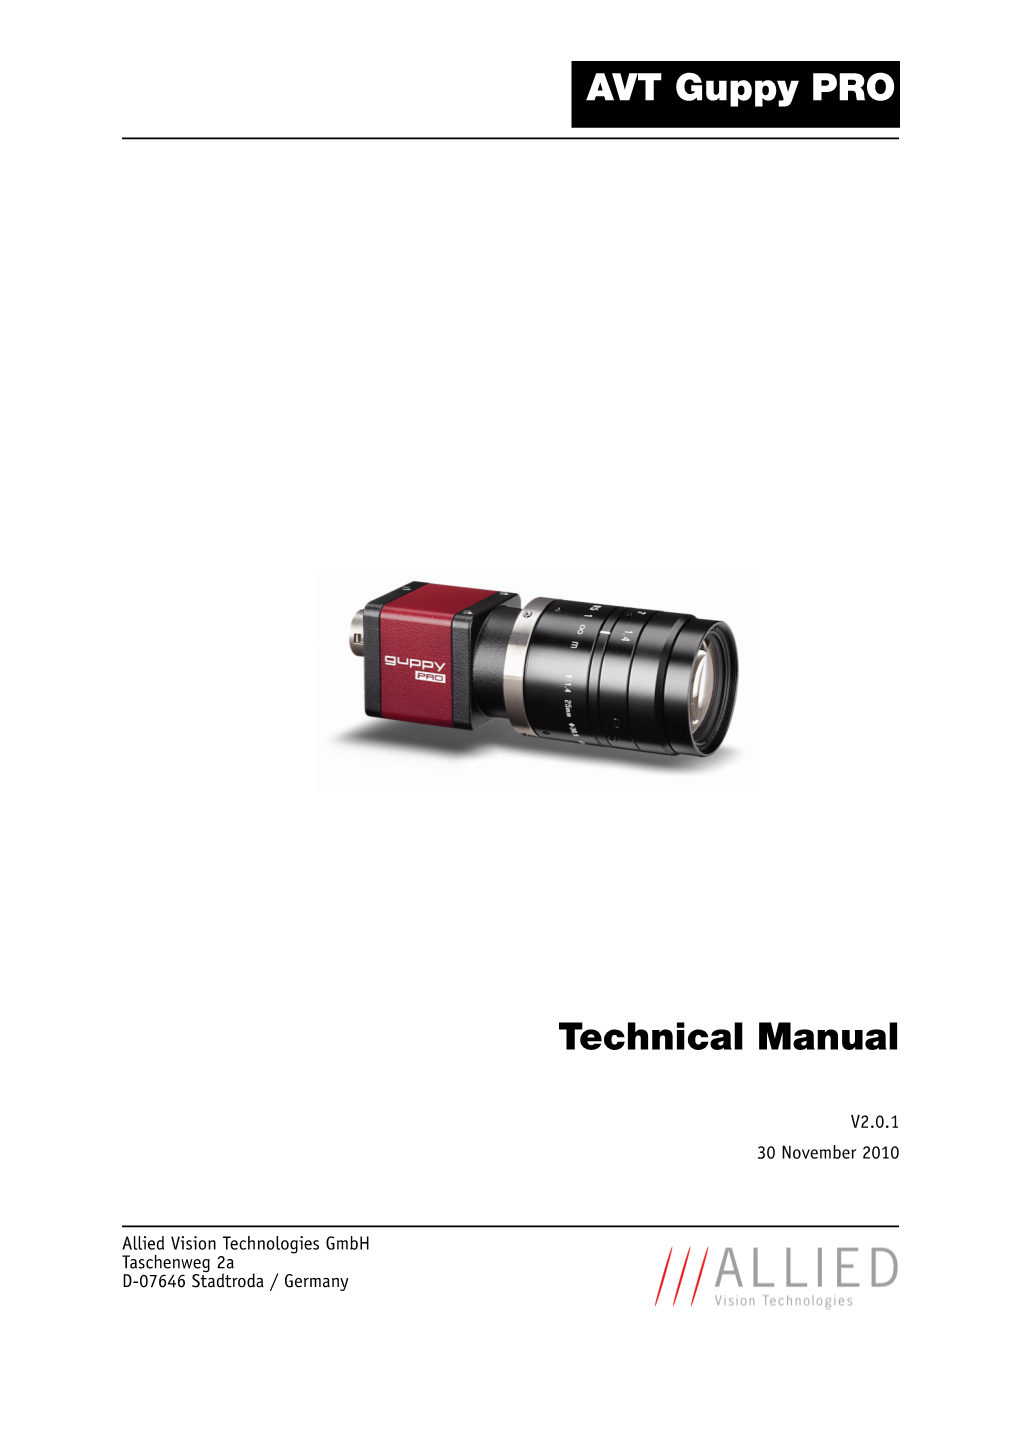 Technical Manual AVT Guppy